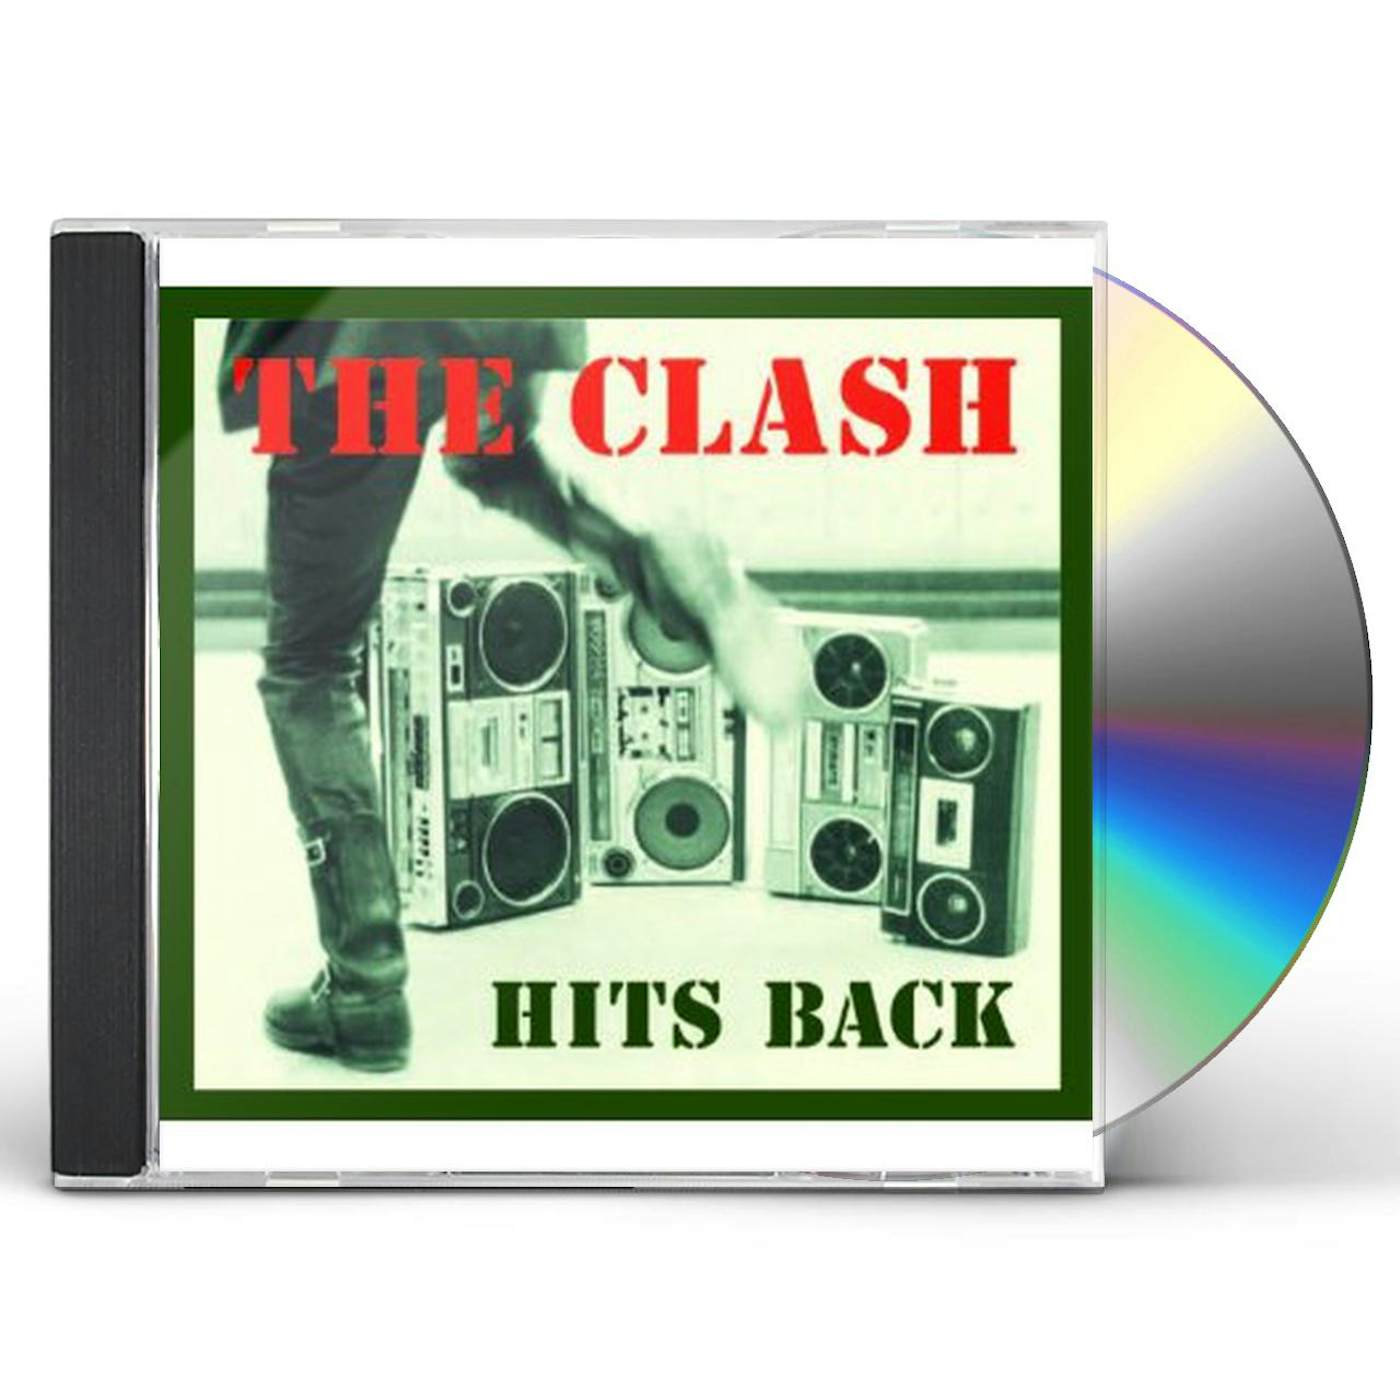 The Clash HITS BACK CD